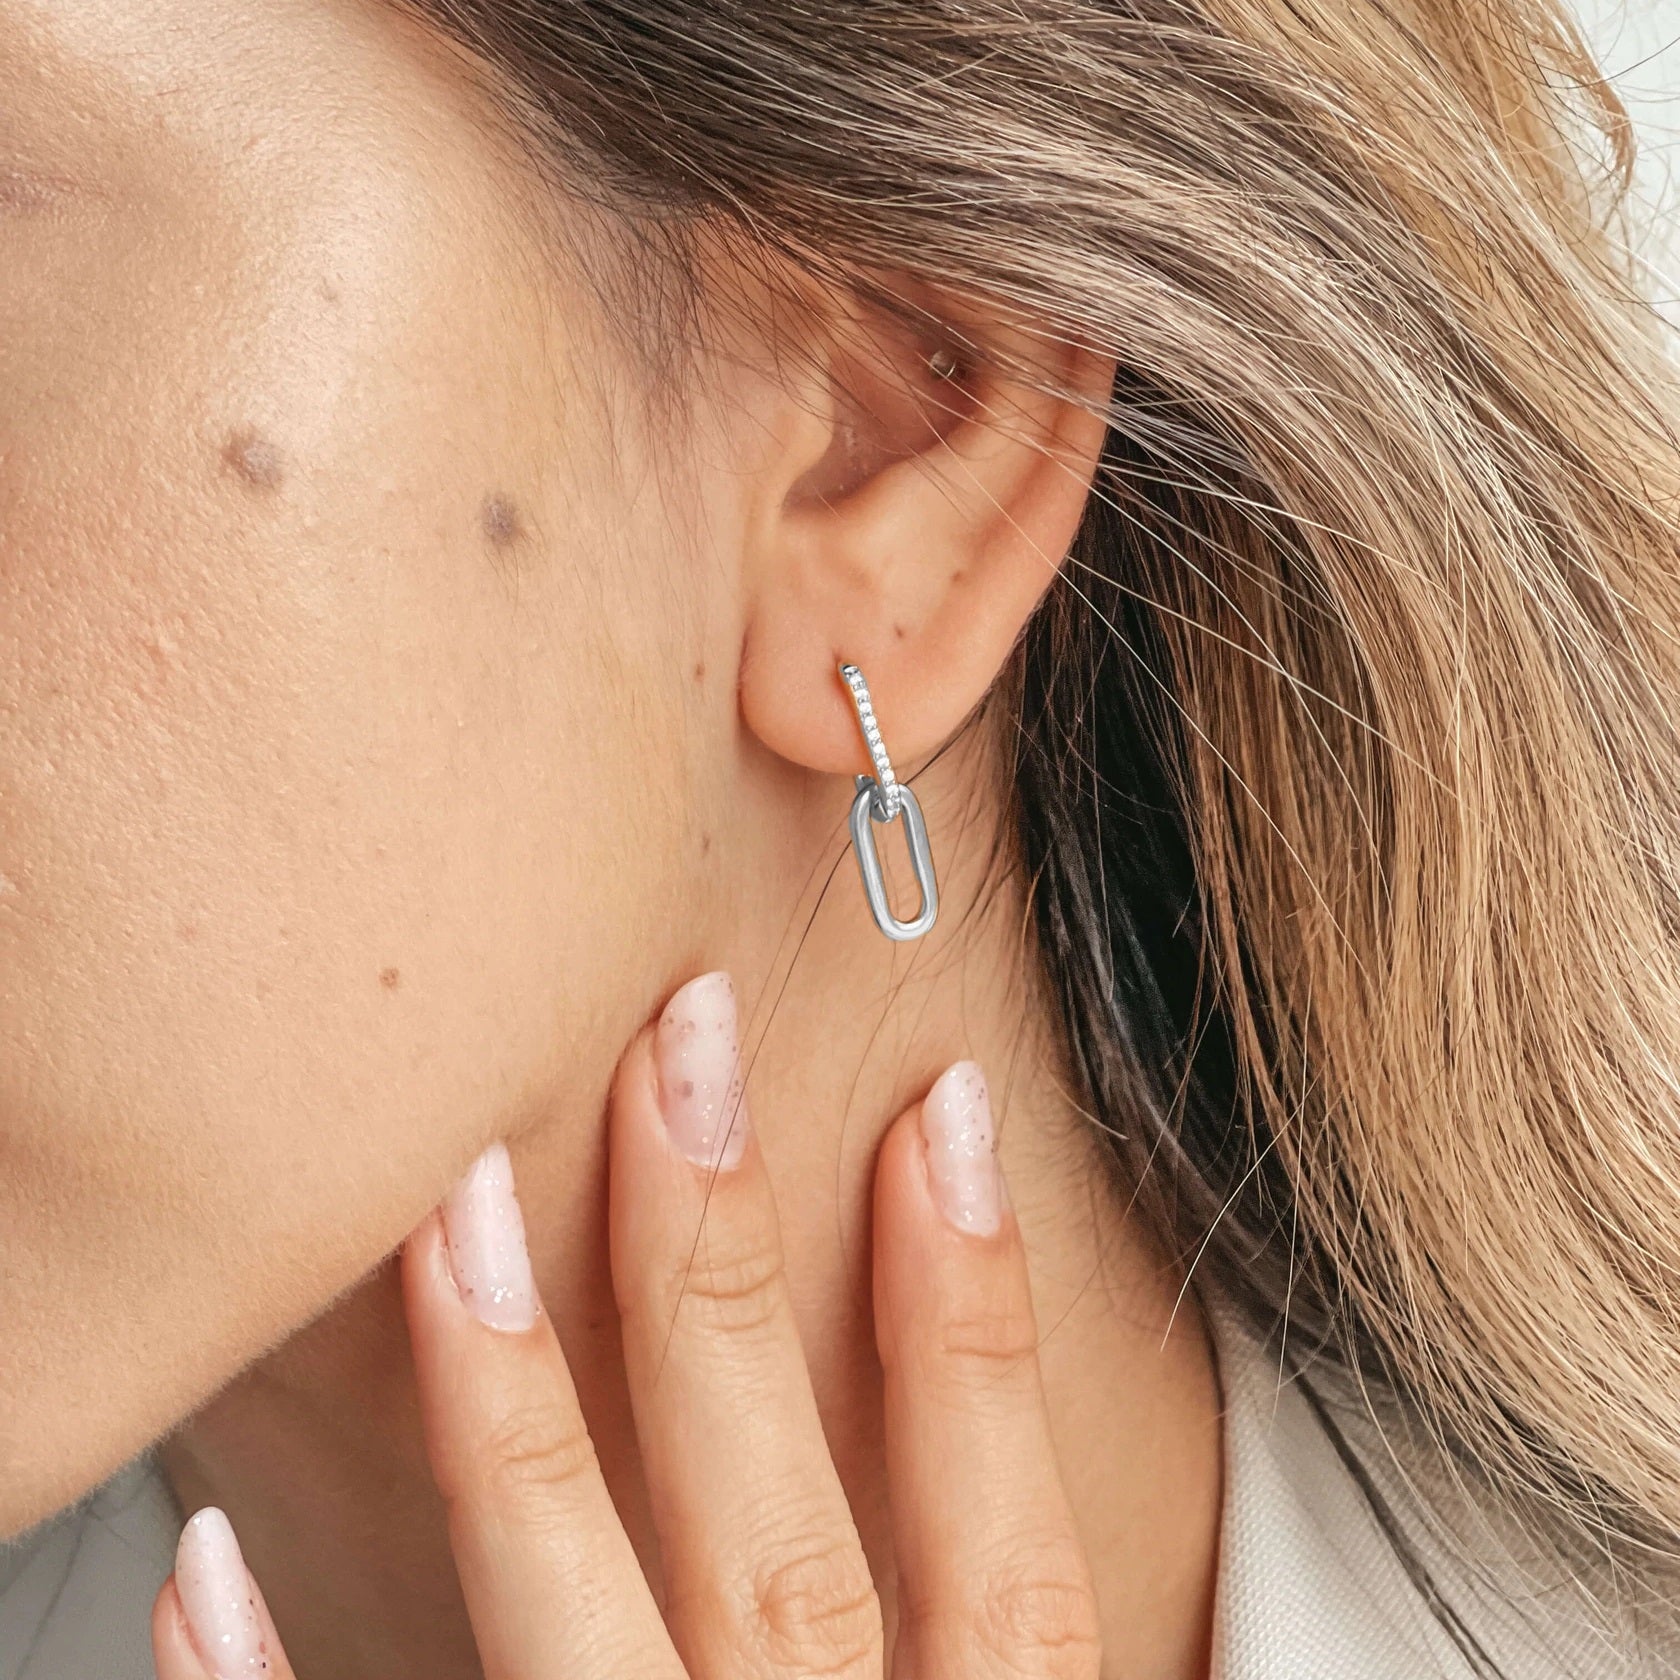 Jessica silver earrings - Zirconium